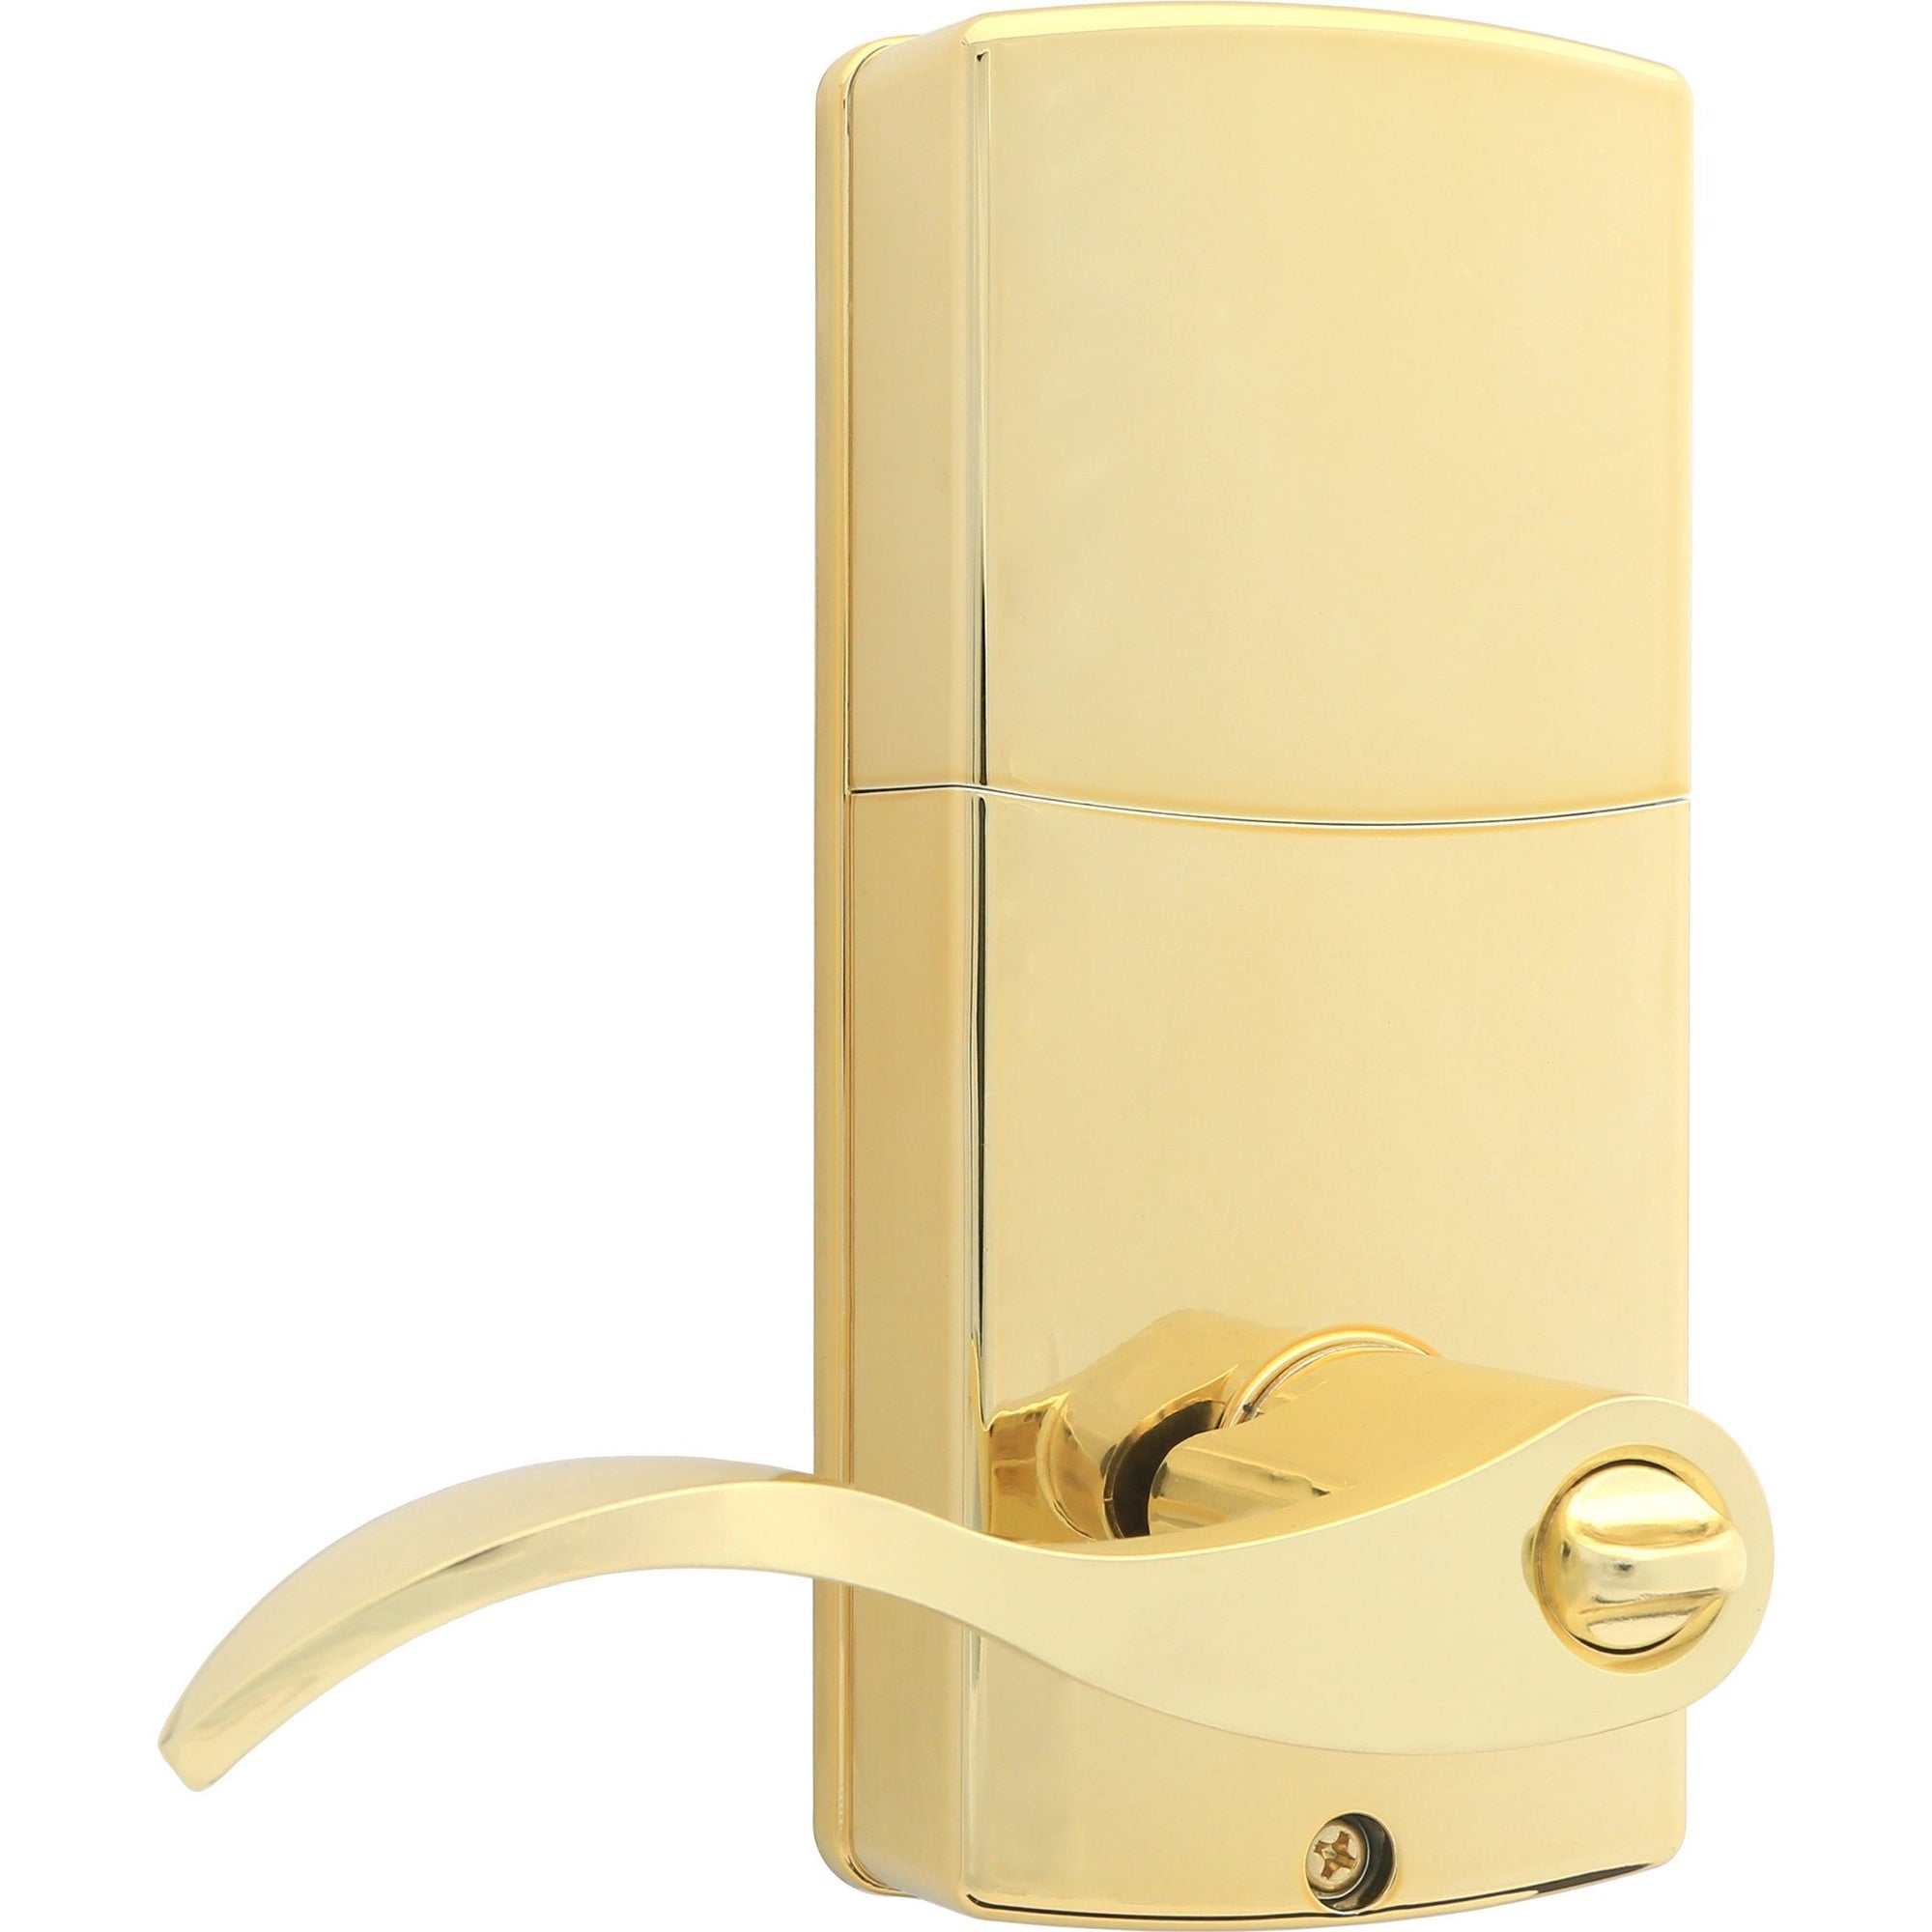 Honeywell 8734001 Electronic Entry Lever Door Lock with Keypad Polished Brass Finish